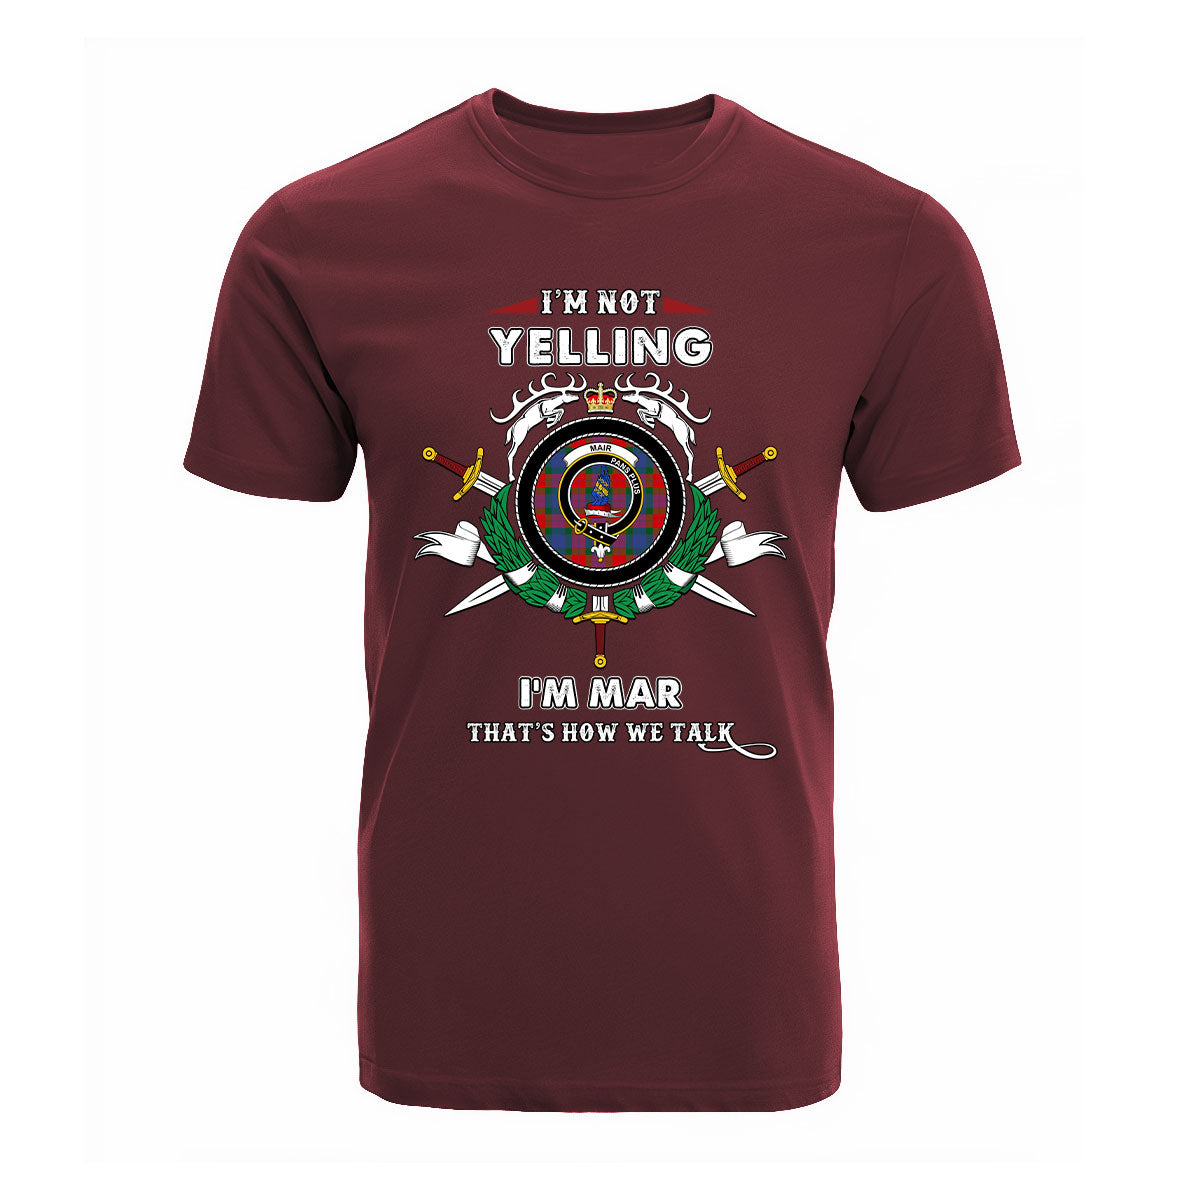 Mar Tartan Crest T-shirt - I'm not yelling style